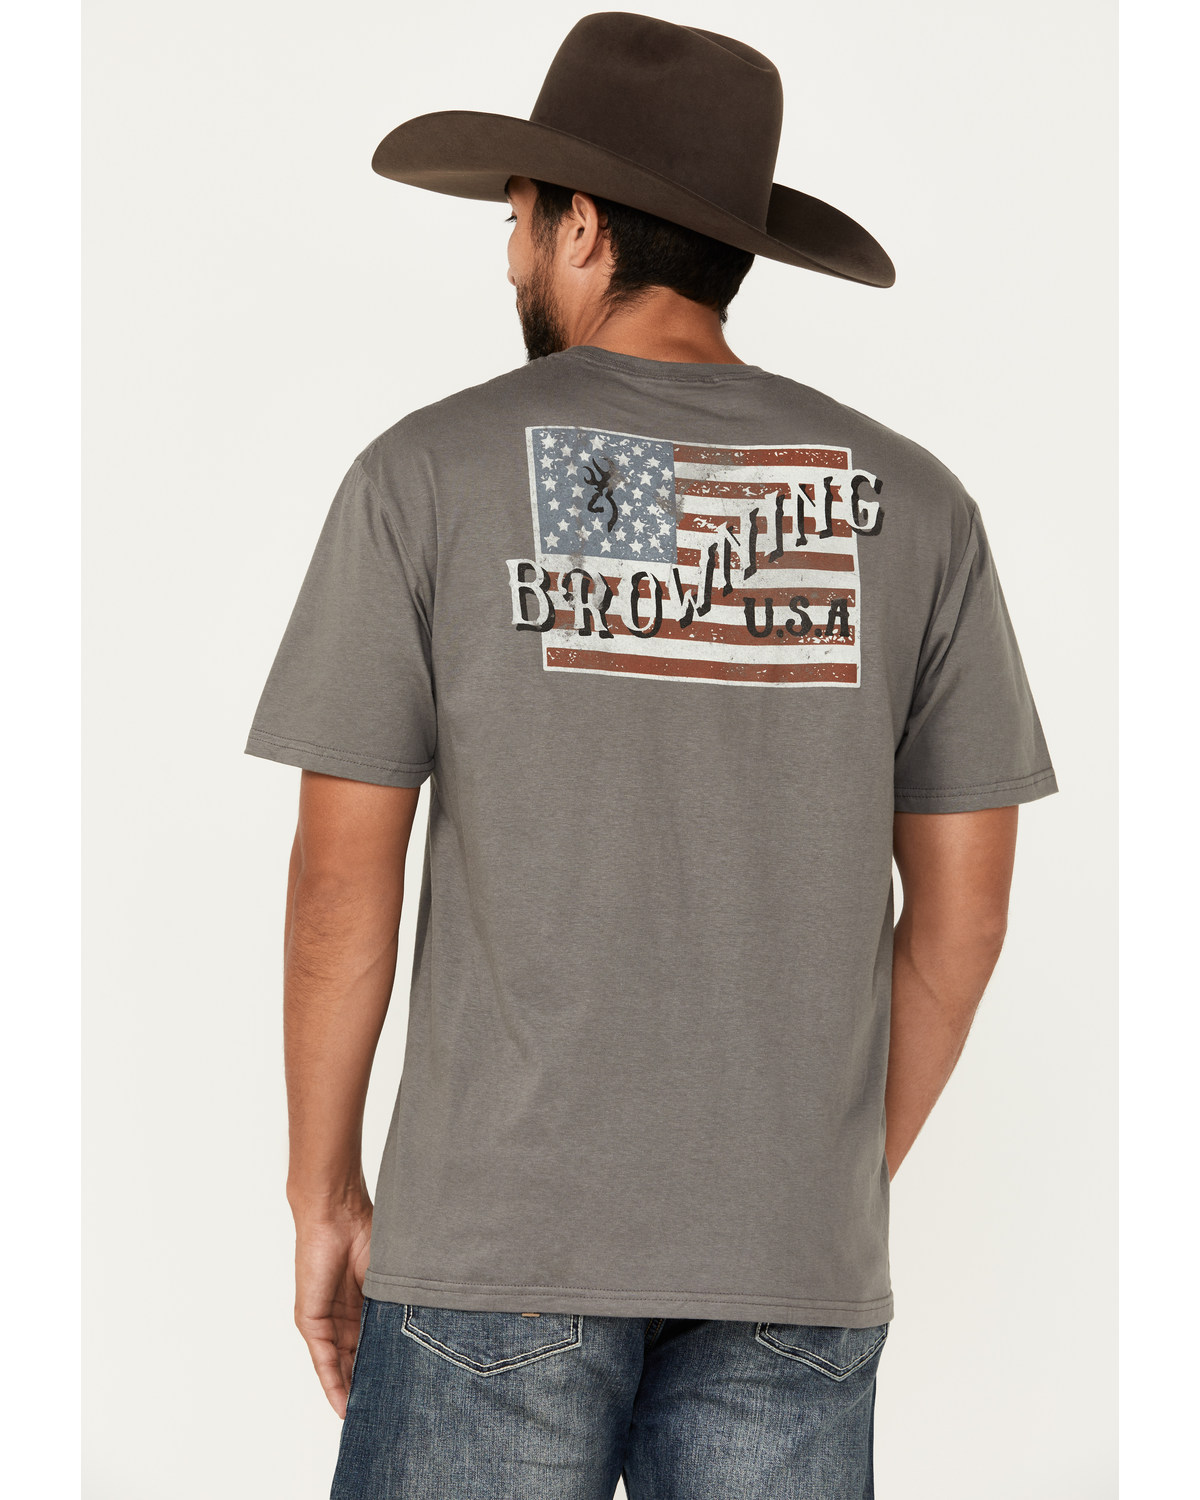 Browning Men's Scroll Buckmark Flag Short Sleeve Graphic T-Shirt